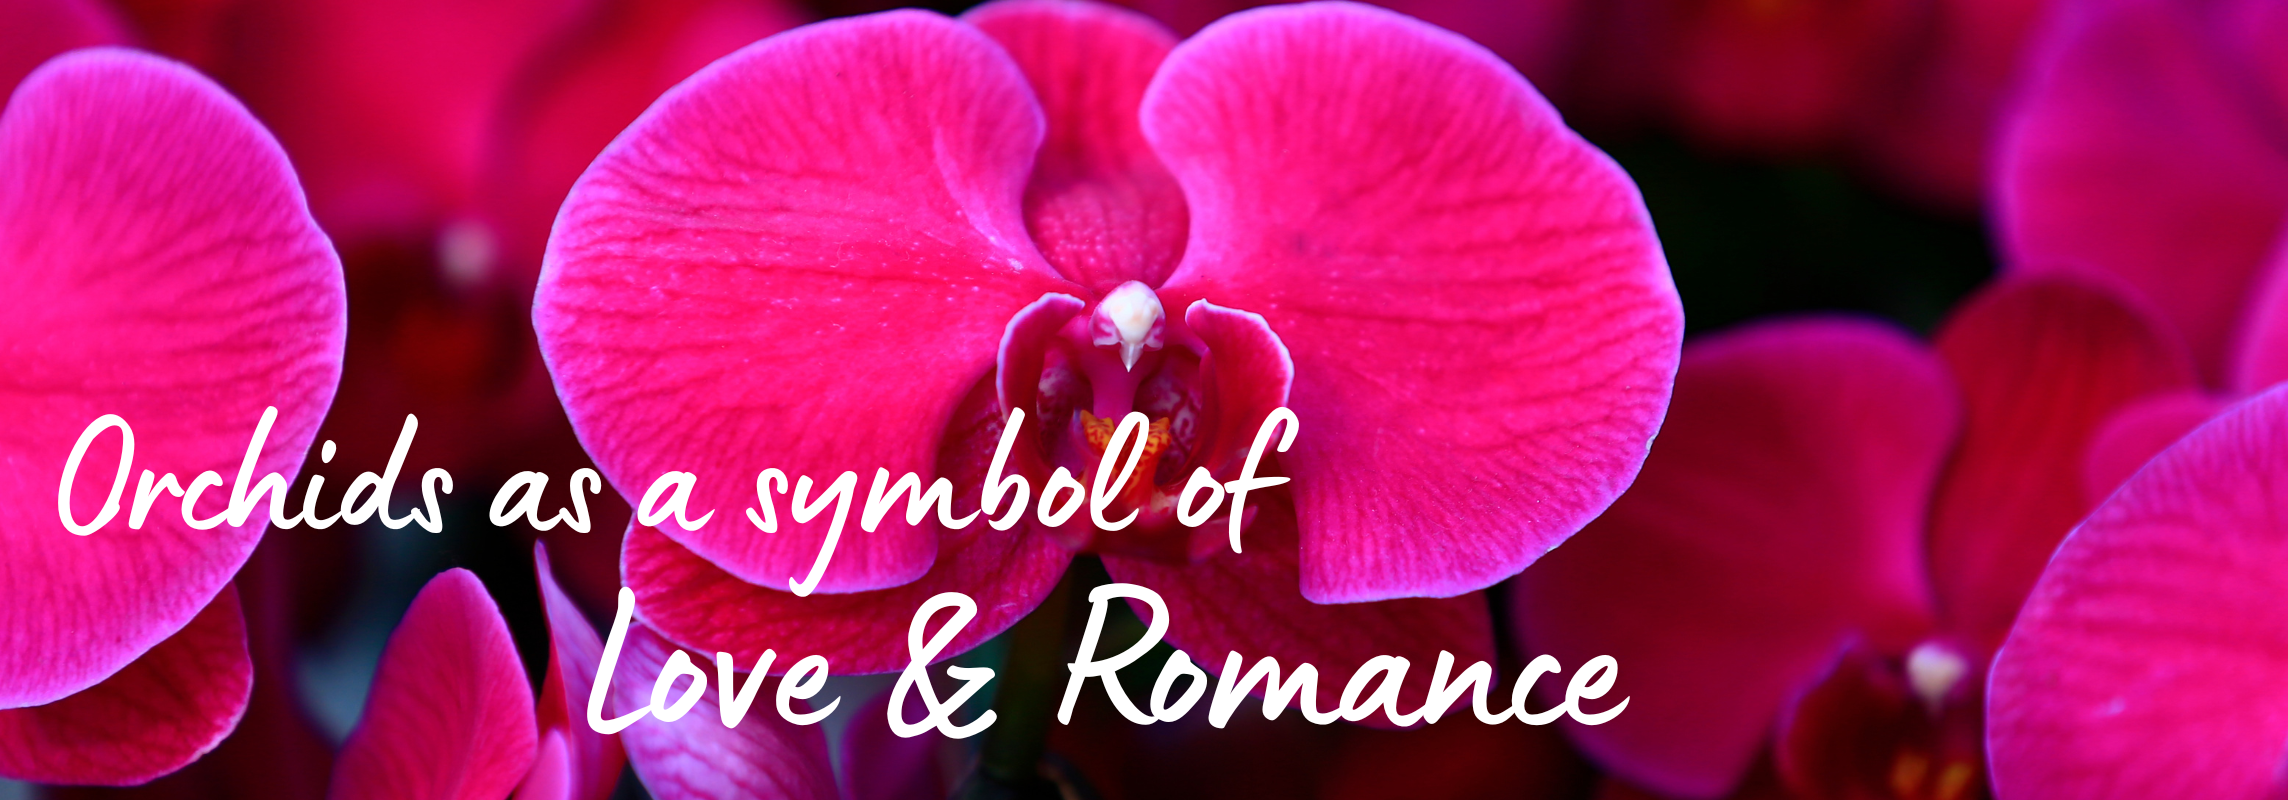 symbol of love and romance